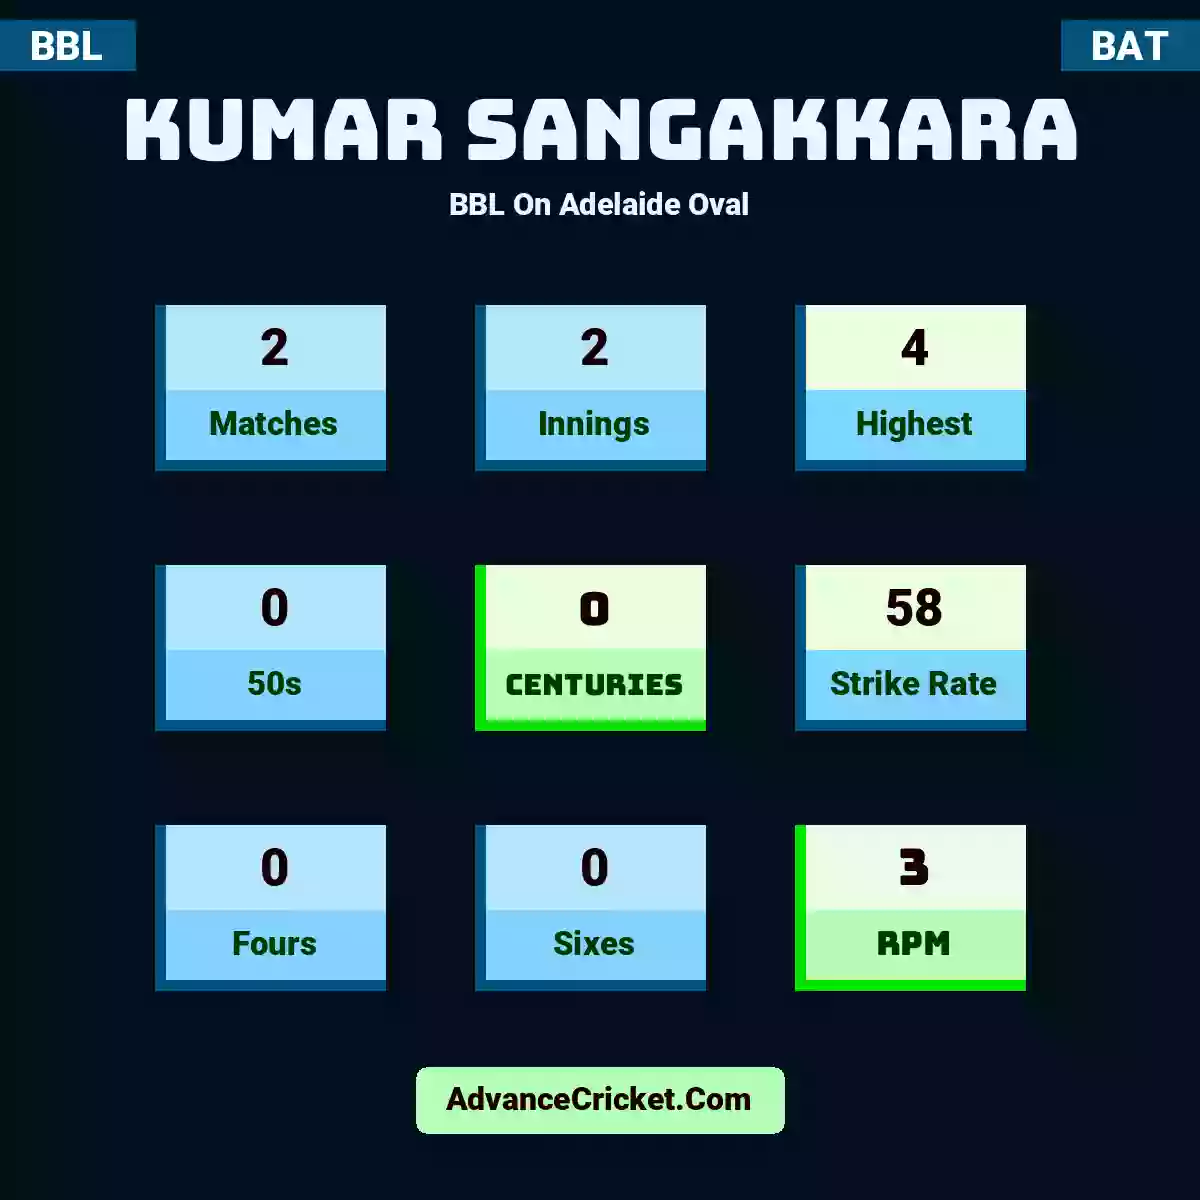 Kumar Sangakkara BBL  On Adelaide Oval, Kumar Sangakkara played 2 matches, scored 4 runs as highest, 0 half-centuries, and 0 centuries, with a strike rate of 58. K.Sangakkara hit 0 fours and 0 sixes, with an RPM of 3.